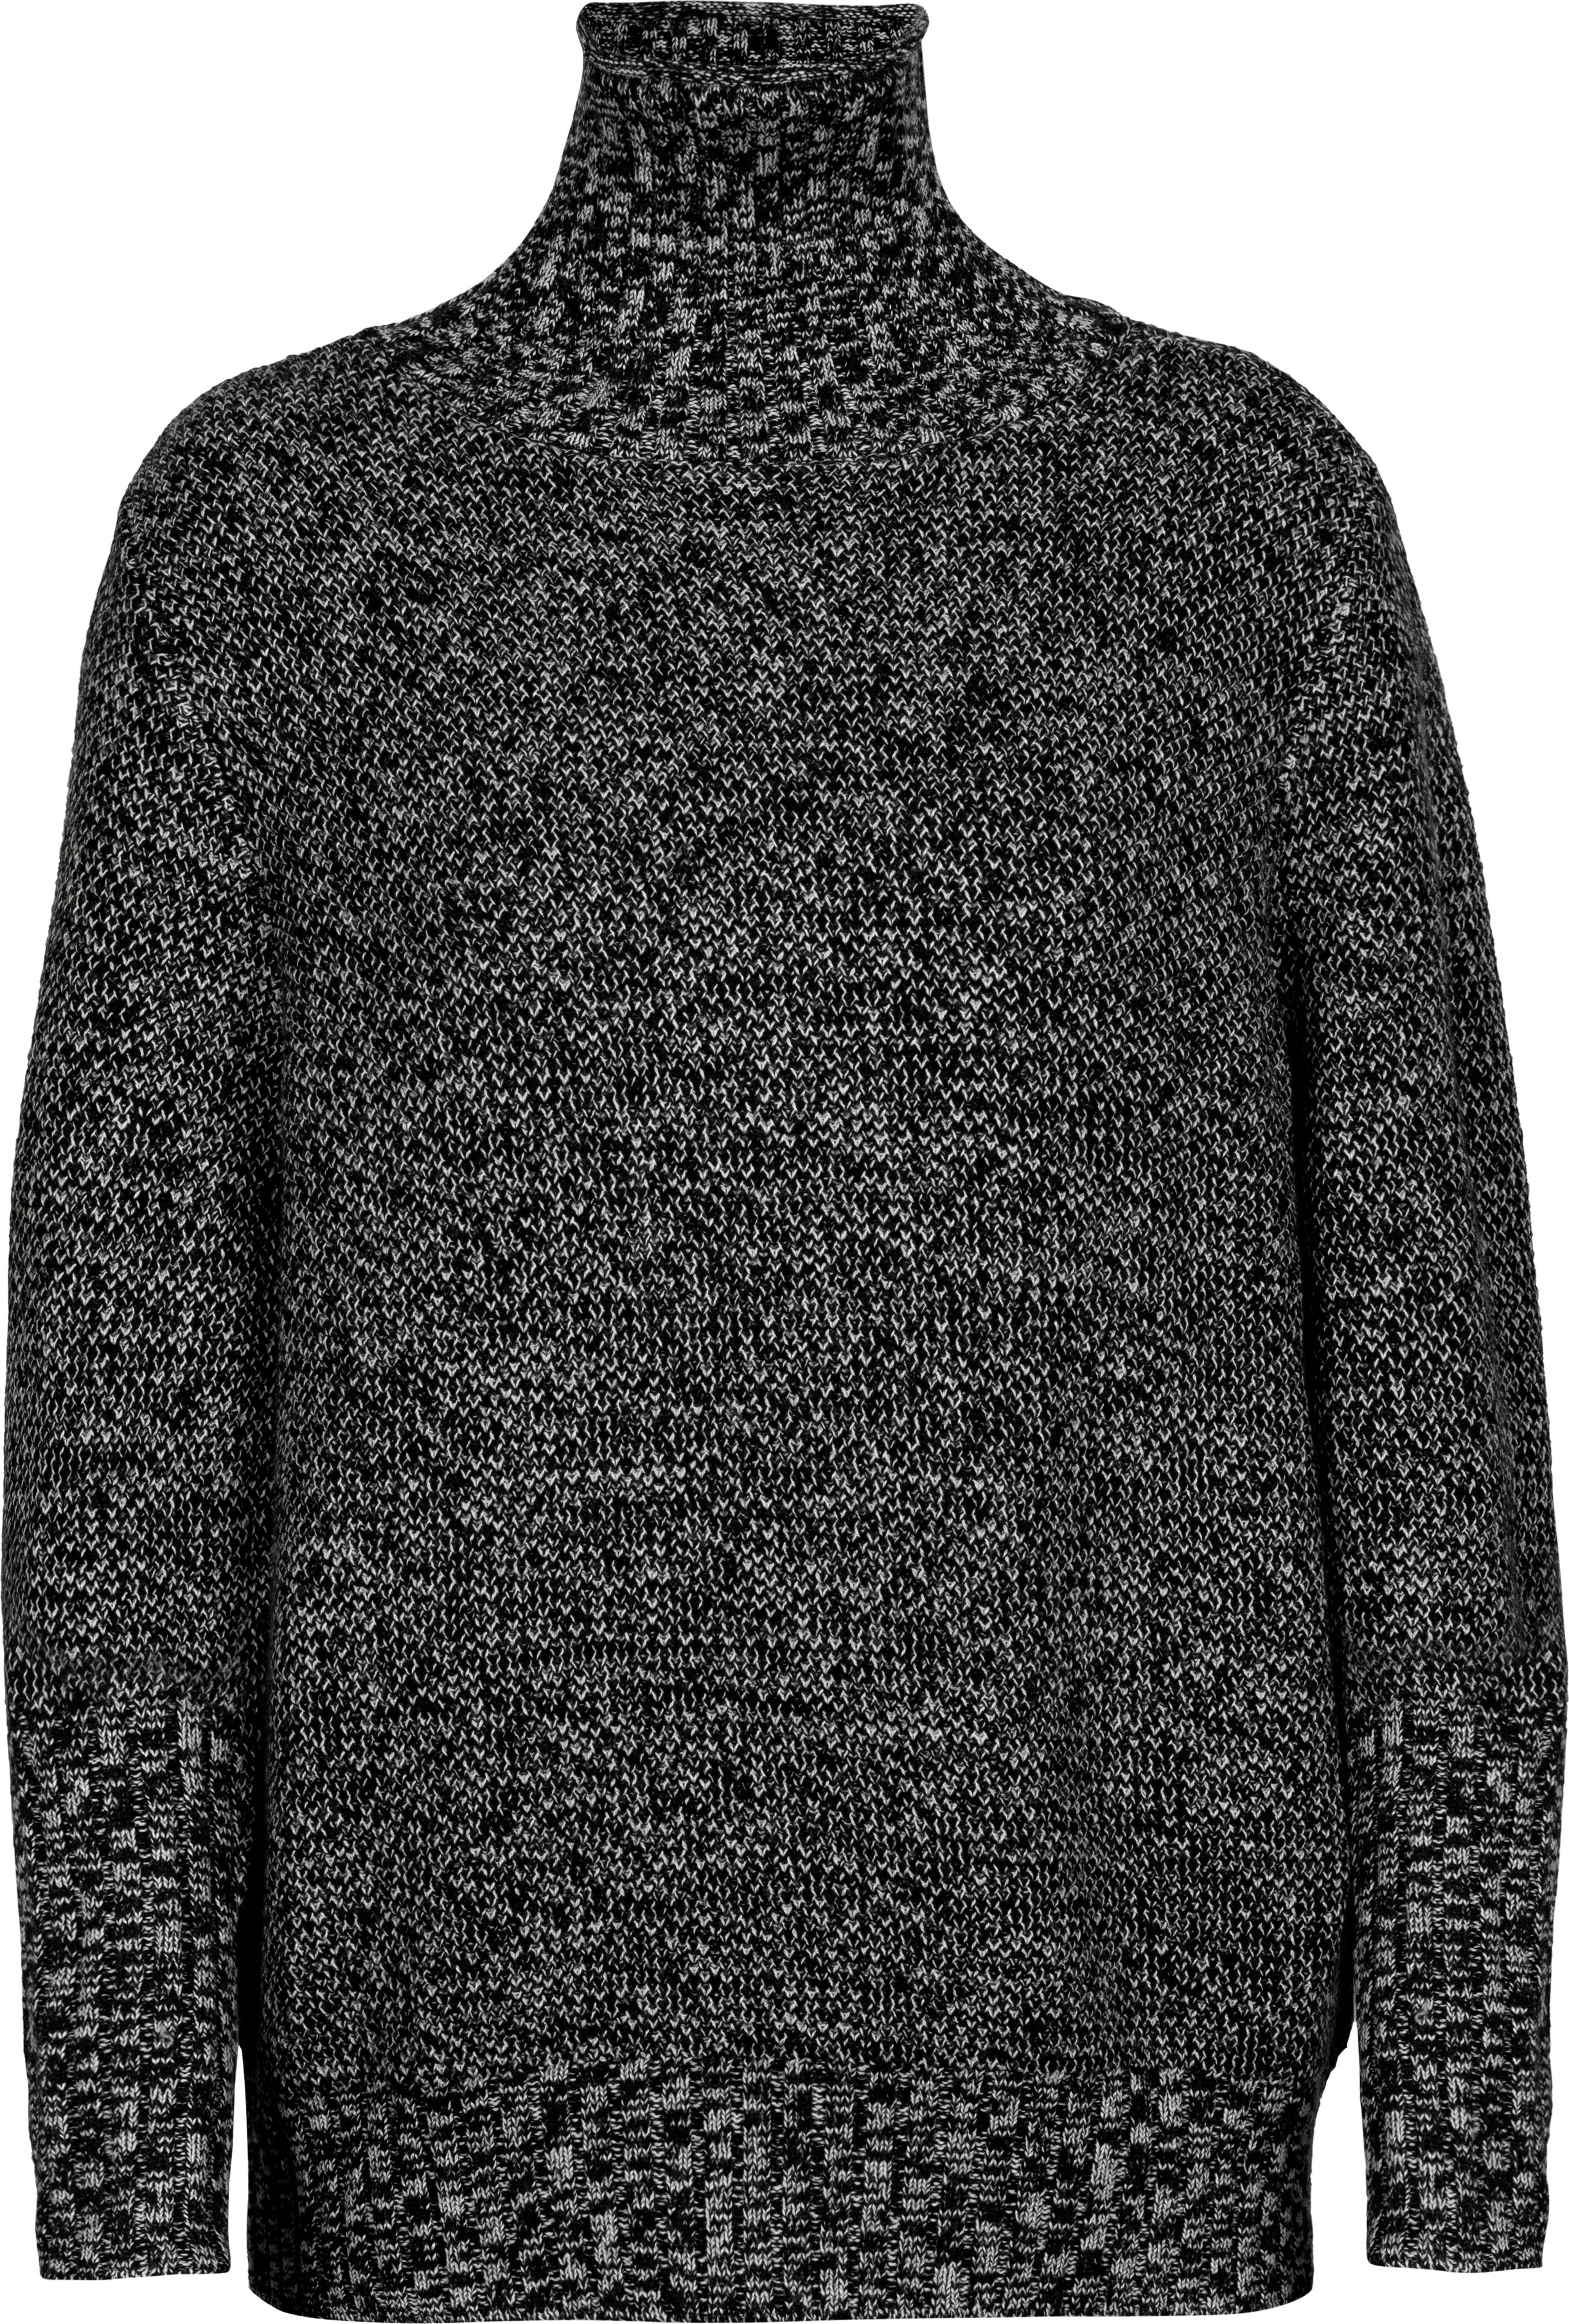 Women's Seevista Funnel Neck Sweater BLACK/SNOW